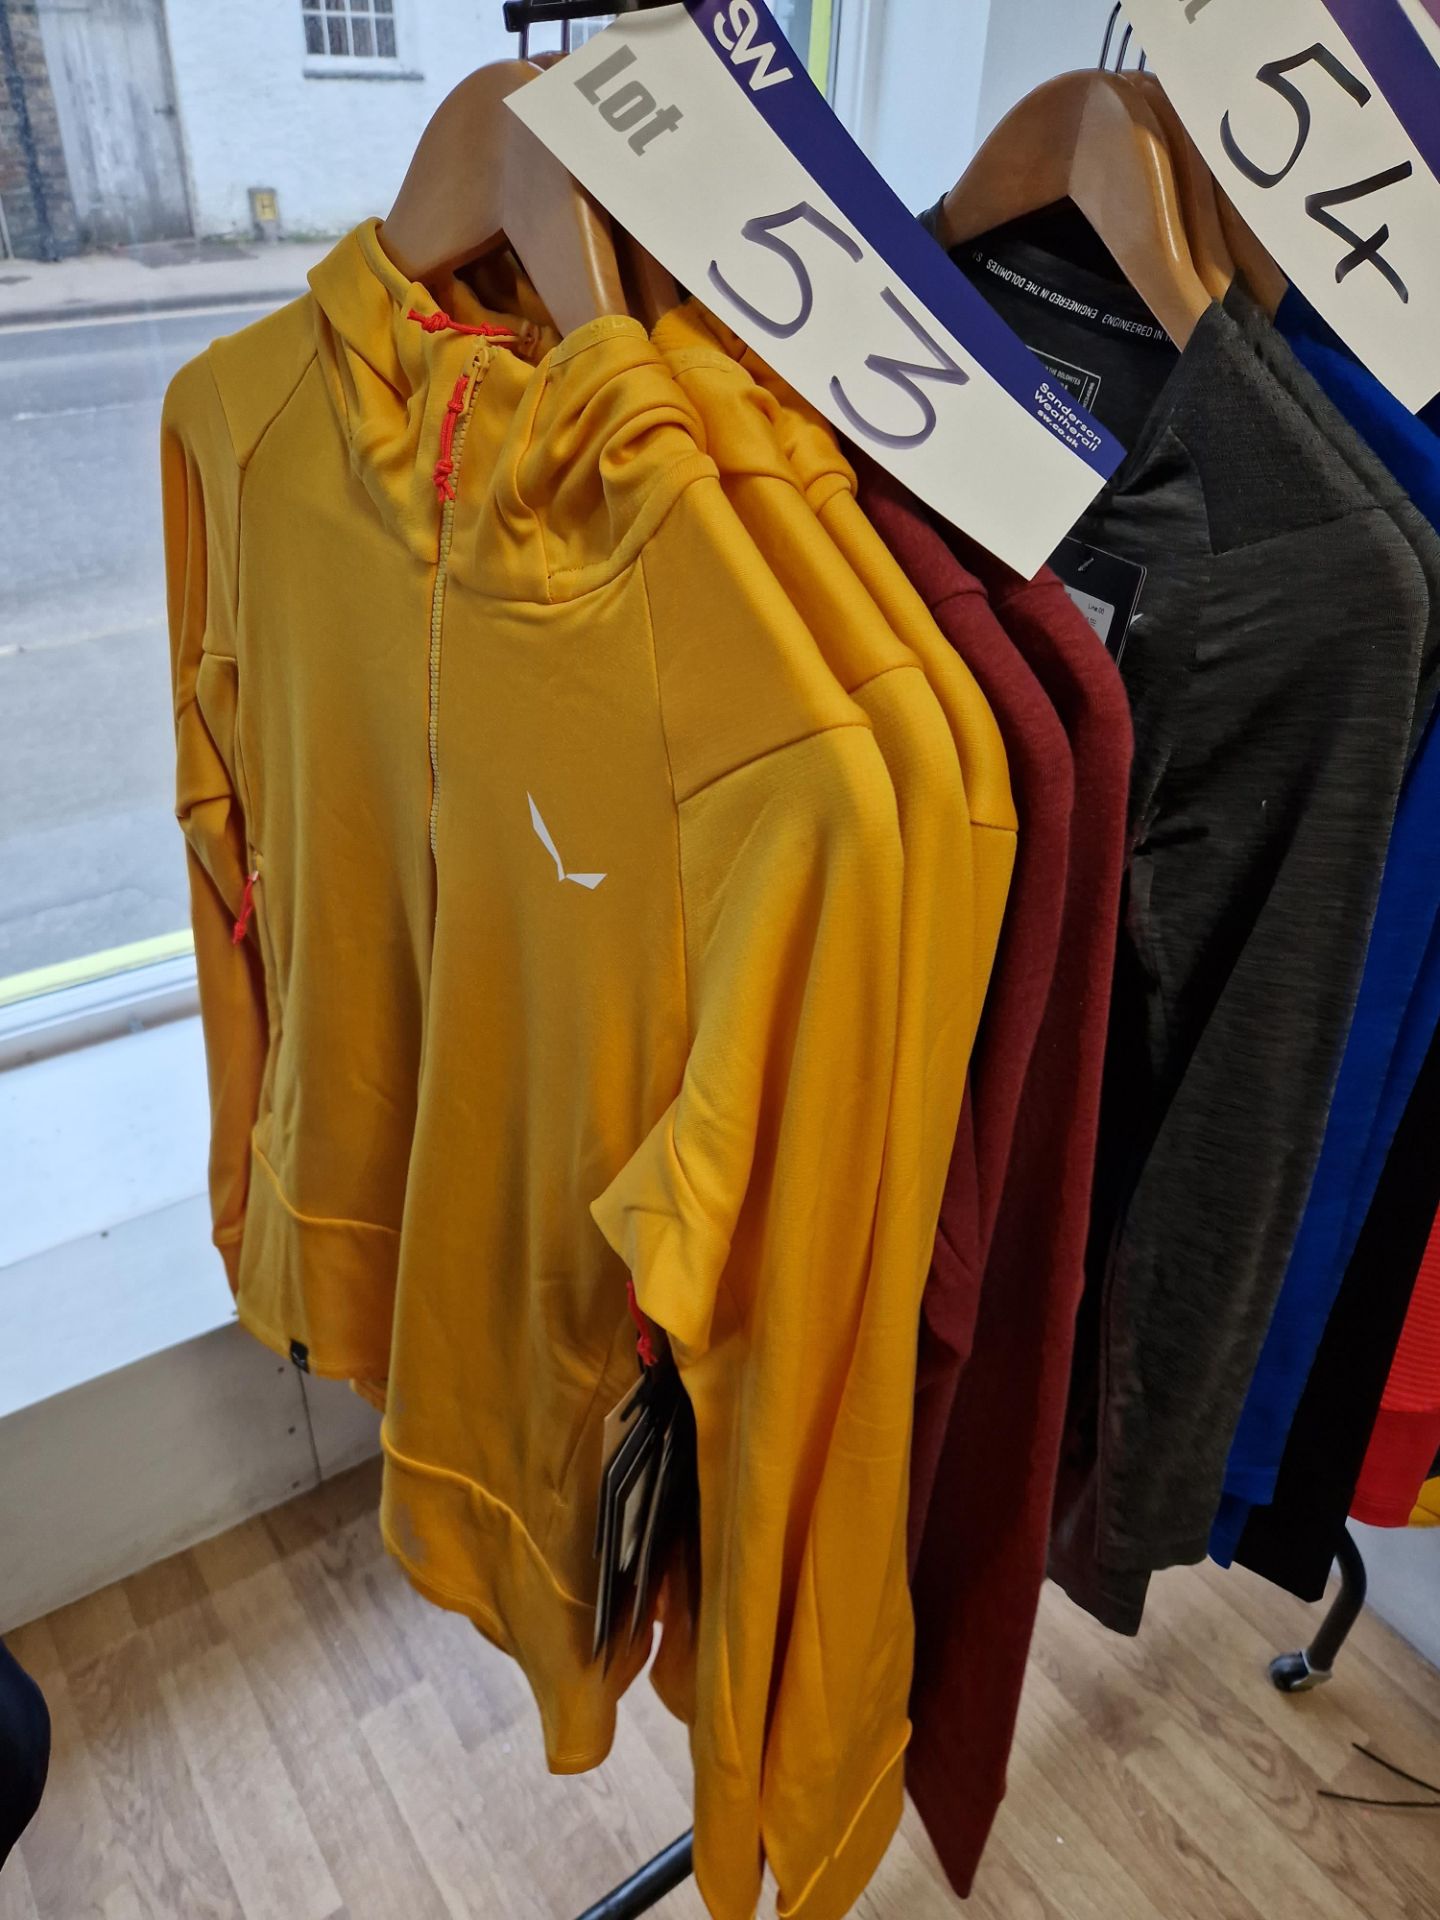 Three Salewa Puez PL W Hooded Jackets, Colour: Gold, Sizes: 44/38 to 48/42 and Two Salewa Lavaredo